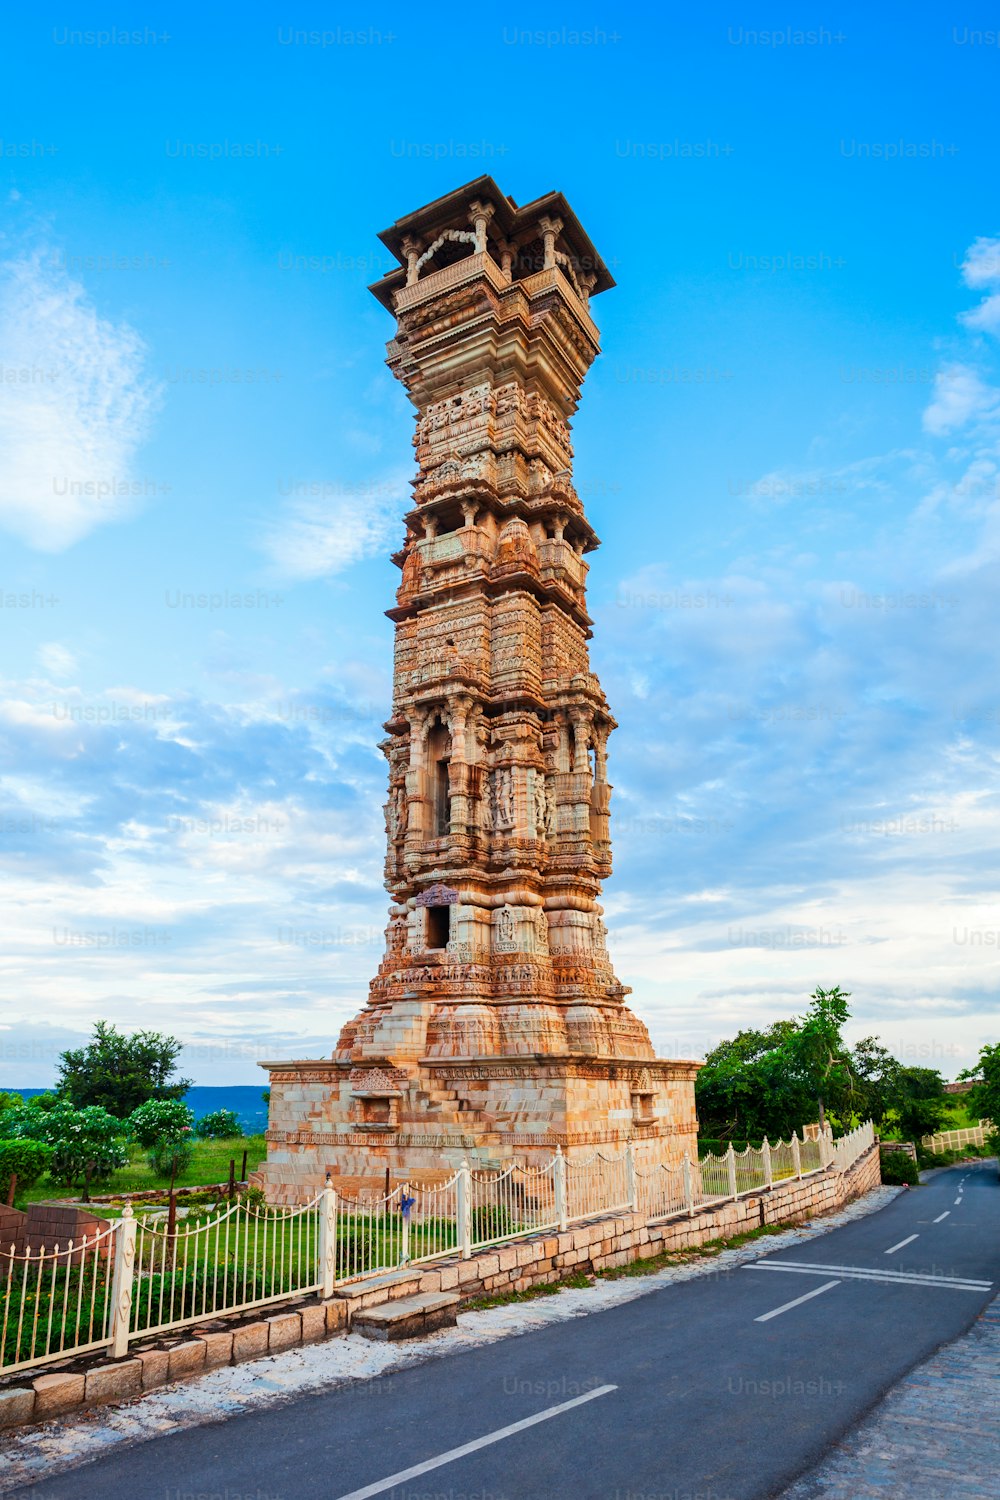 Kirti Stambh는 명예의 탑이 인도 라자스탄 주 치토르가르 시의 치토르 요새에 있는 기념비 타워라는 것을 의미합니다